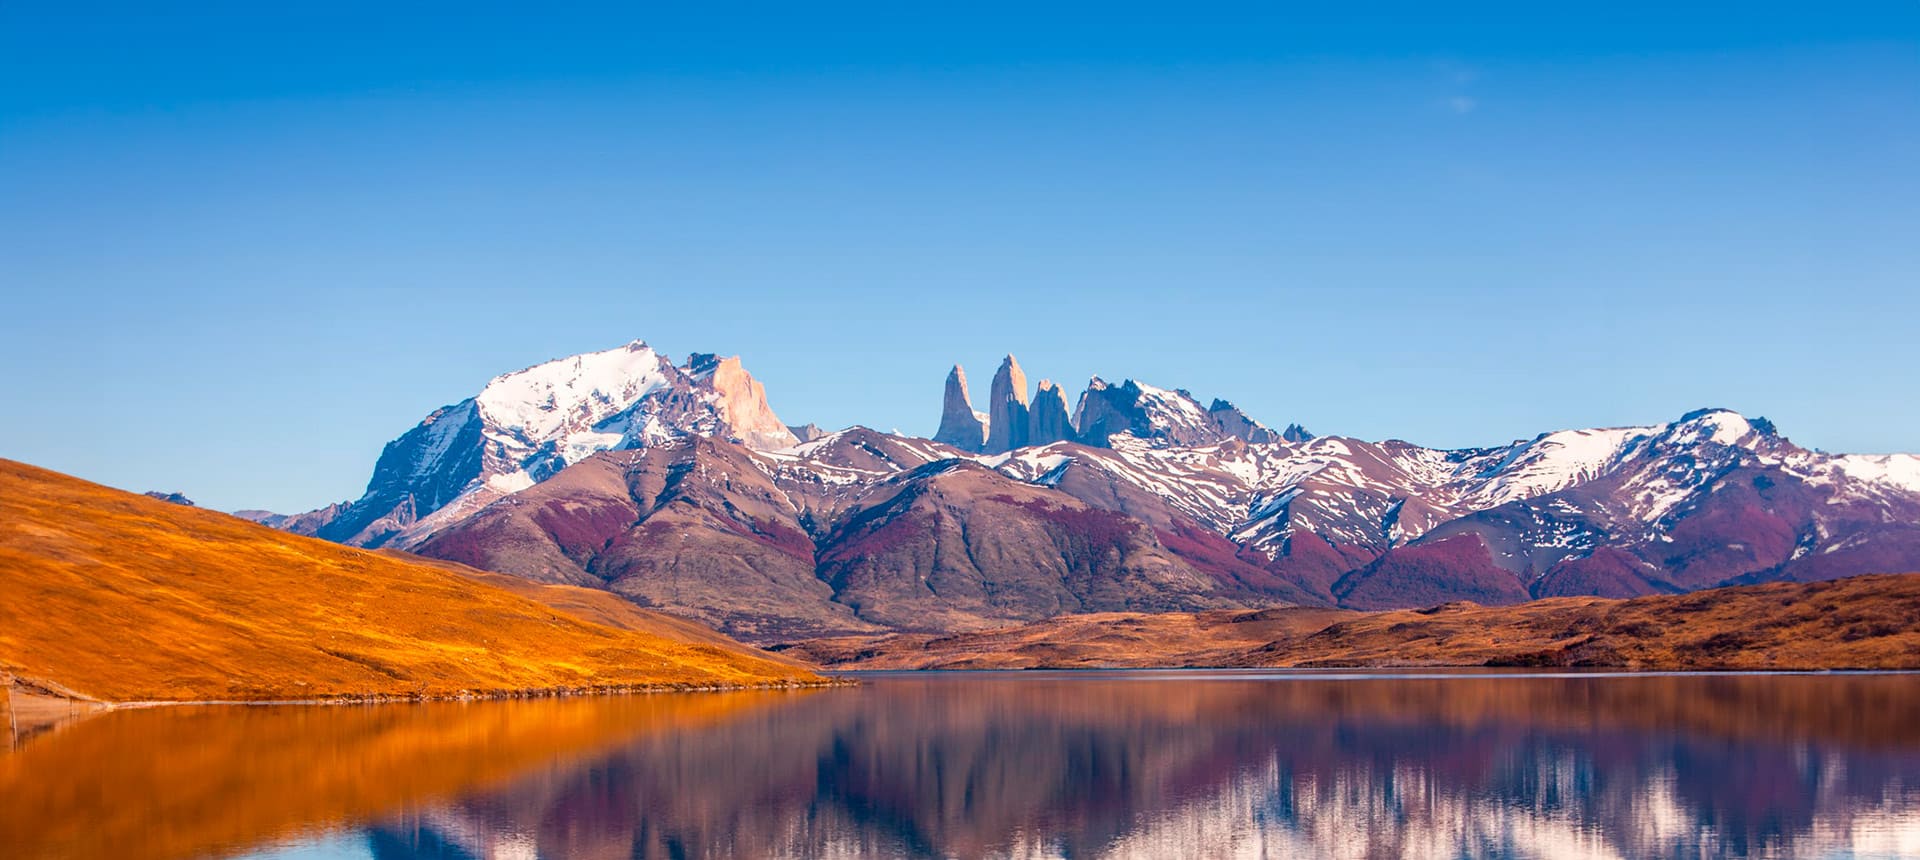 Patagonia Revelead Safari: 9 Days in Los Glaciares & Torres del